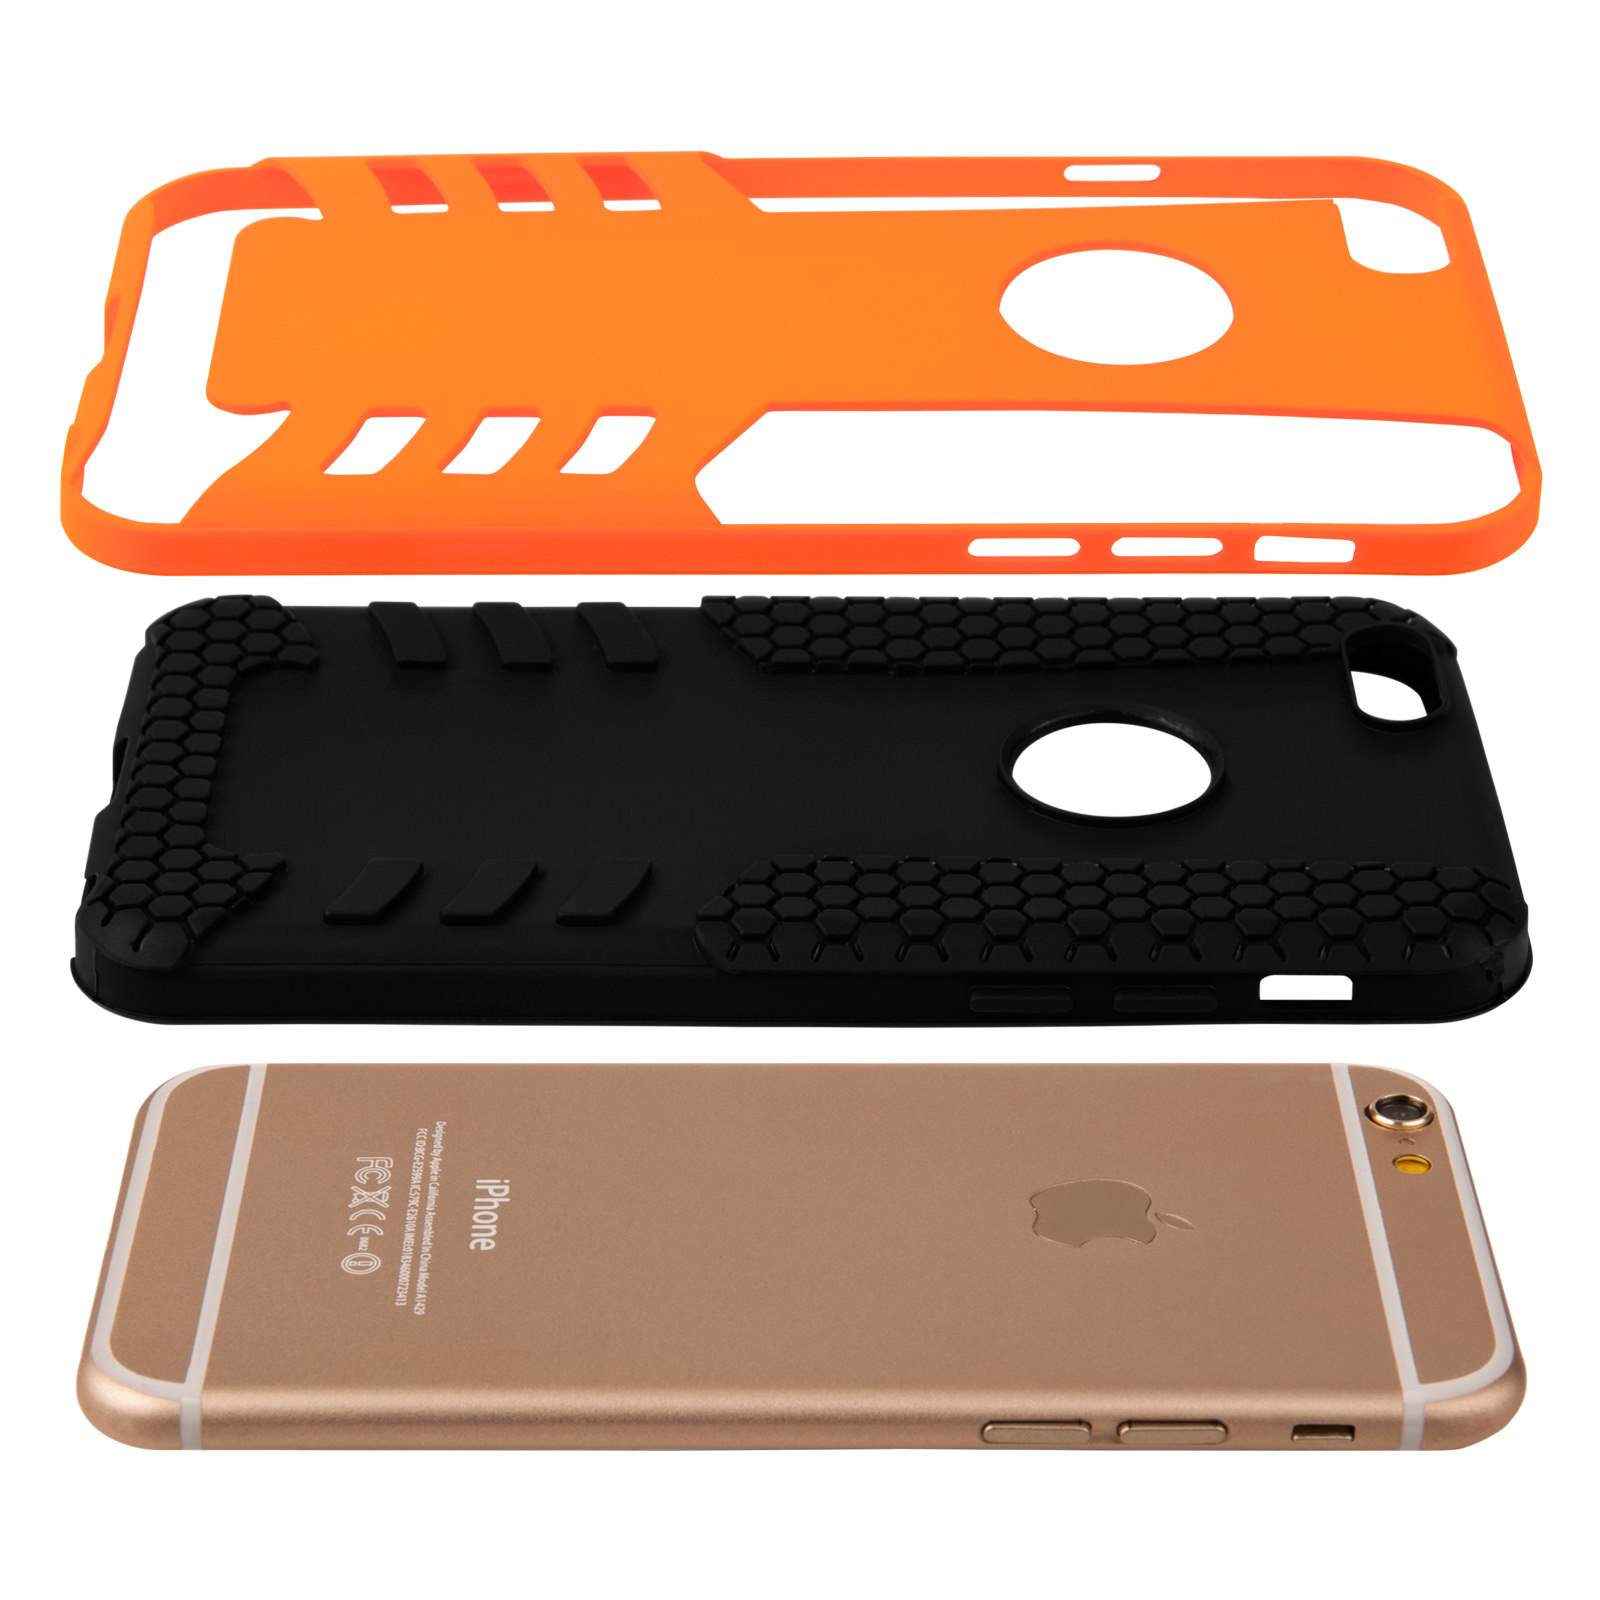 Caseflex iPhone 6 / 6s Border Combo Case - Orange